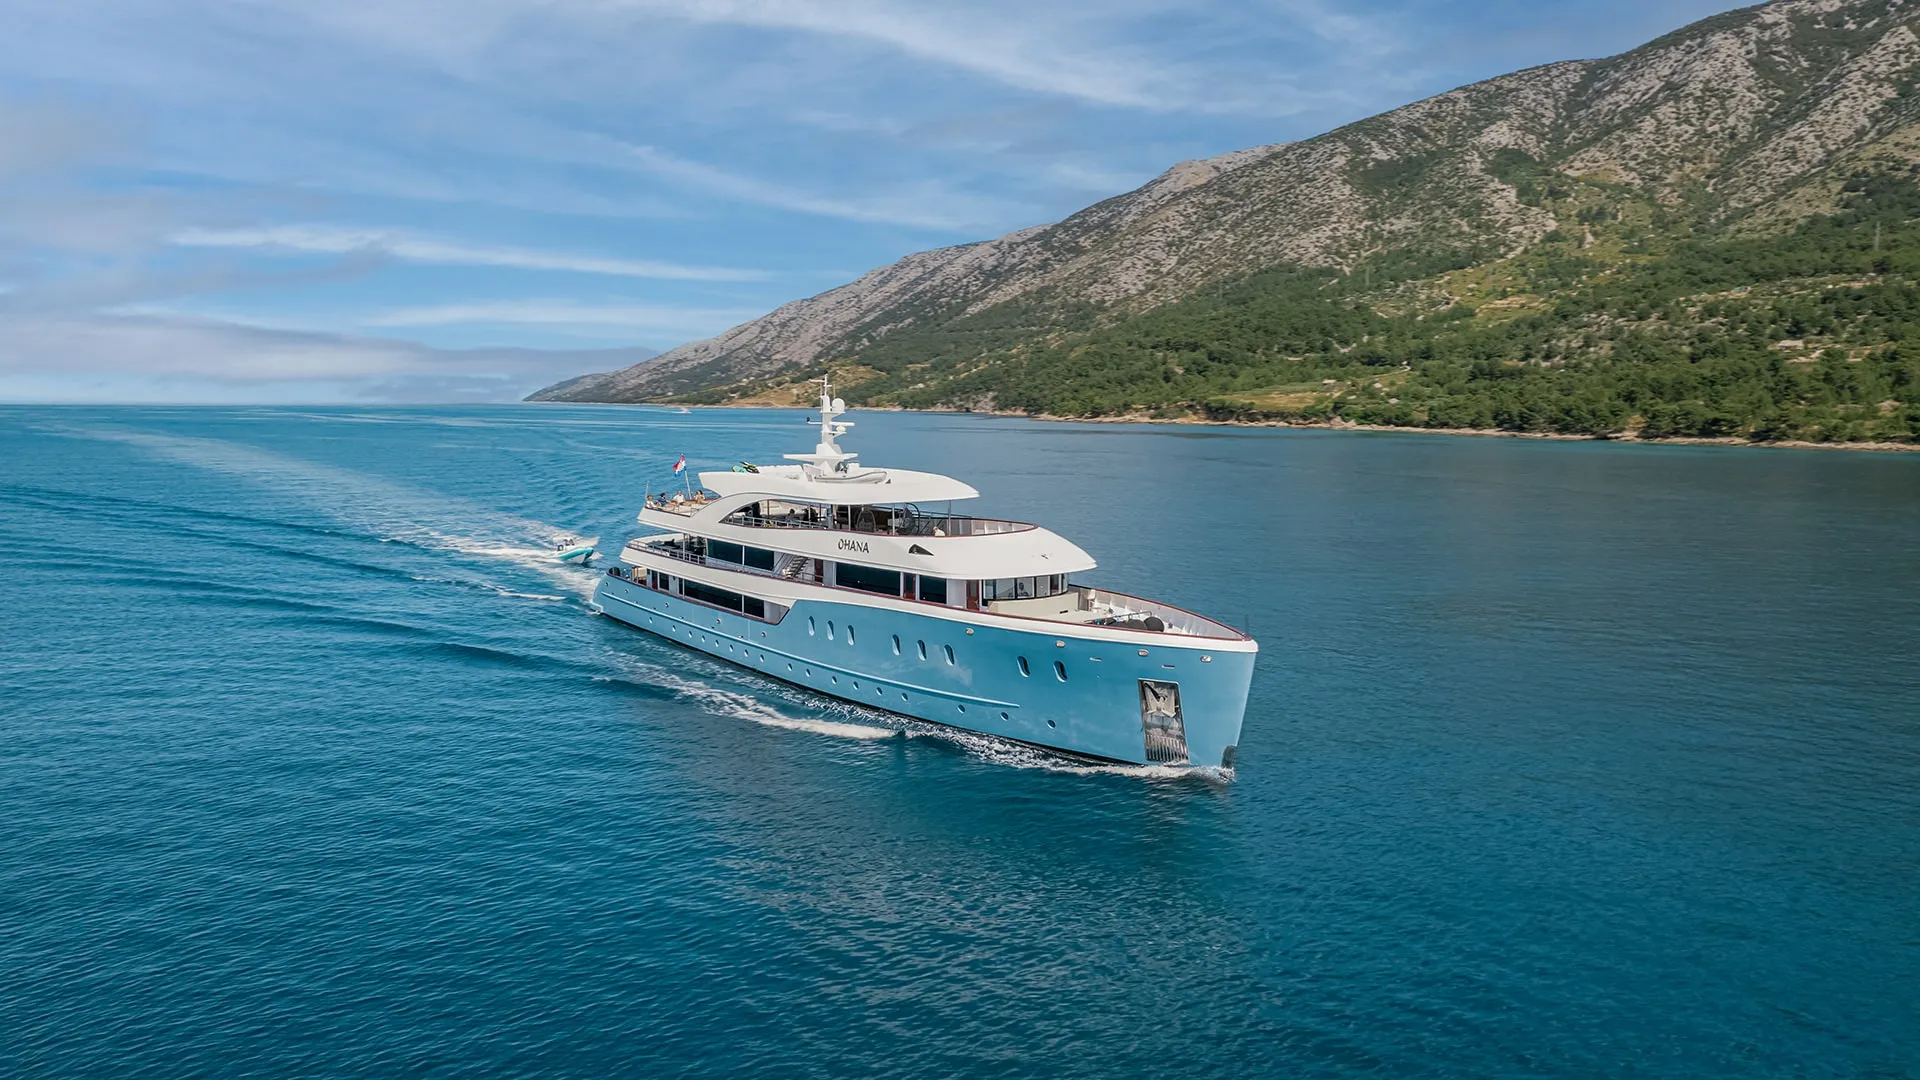 Ohana – a family friendly luxury yacht